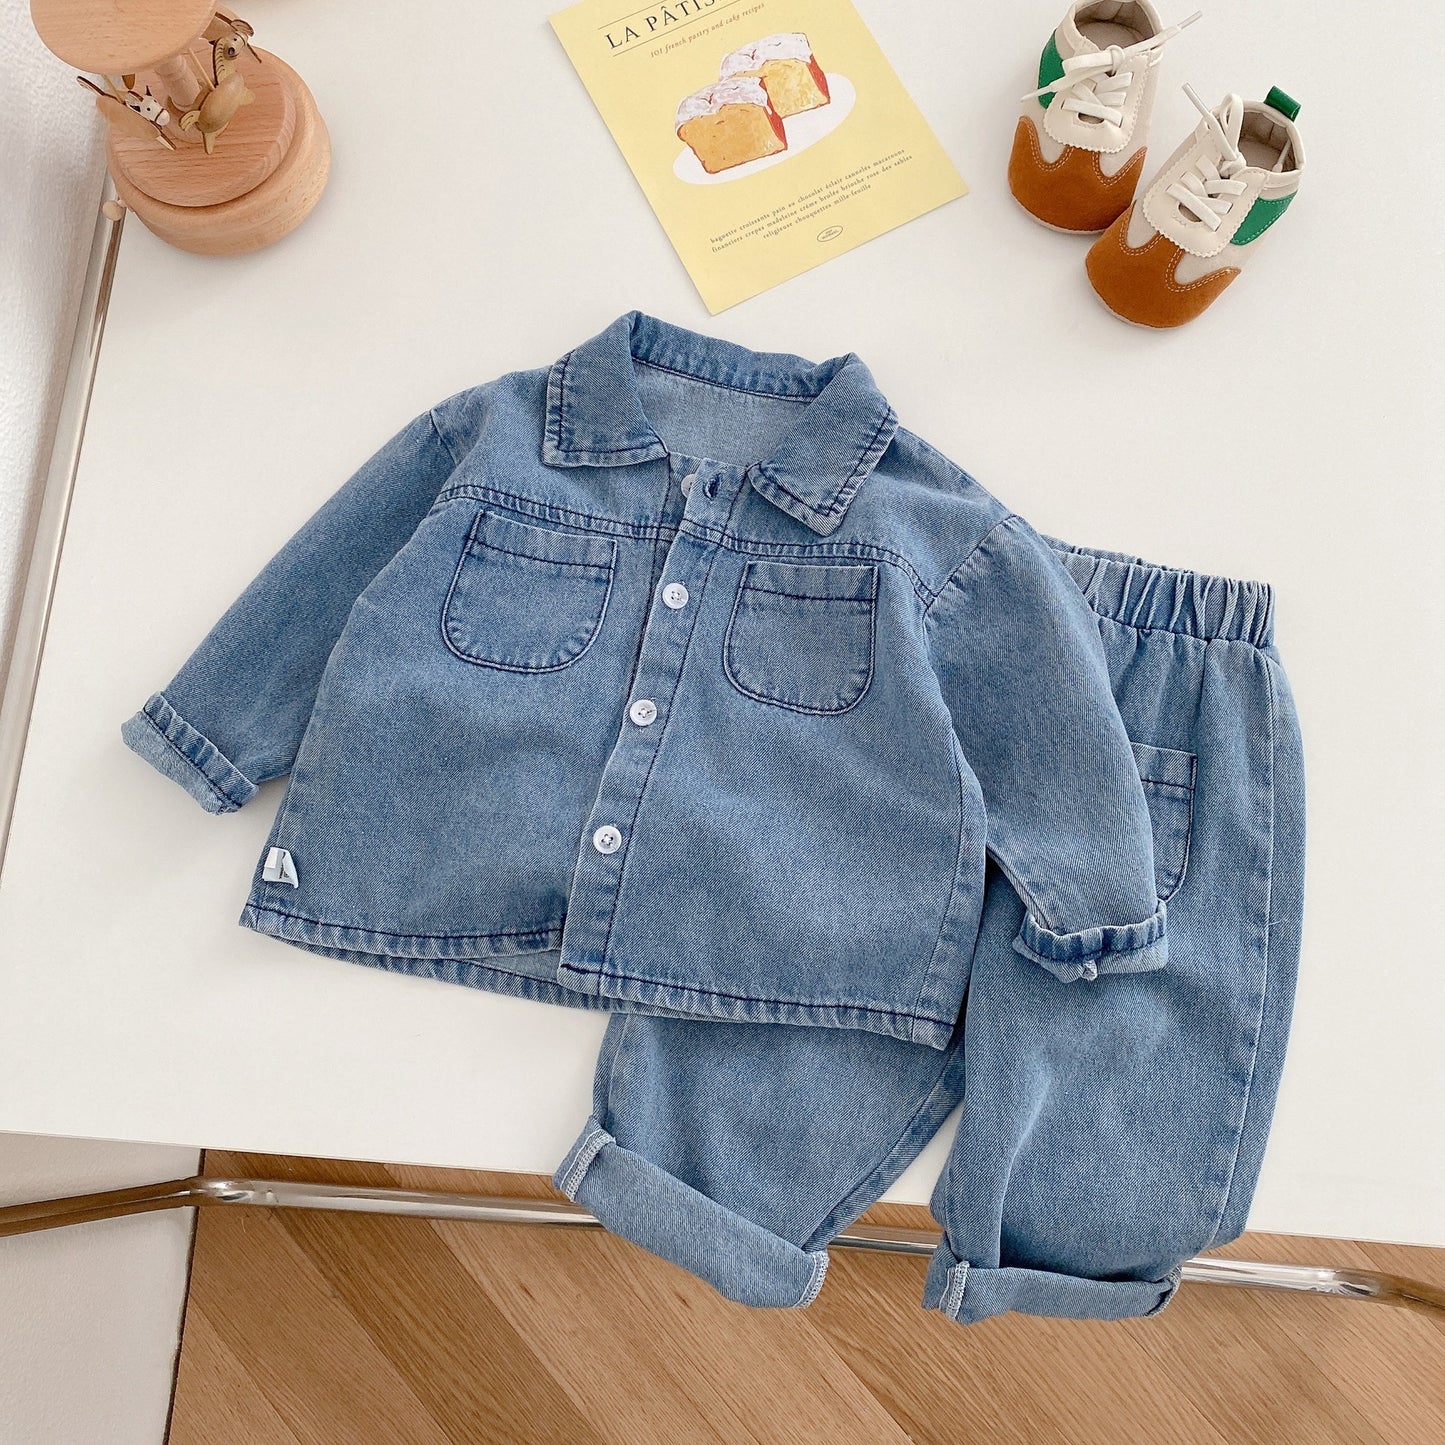 Infant Toddler Denim Girls' Boys' Clothing Button Top Dark Blue Jeans Pant Sets